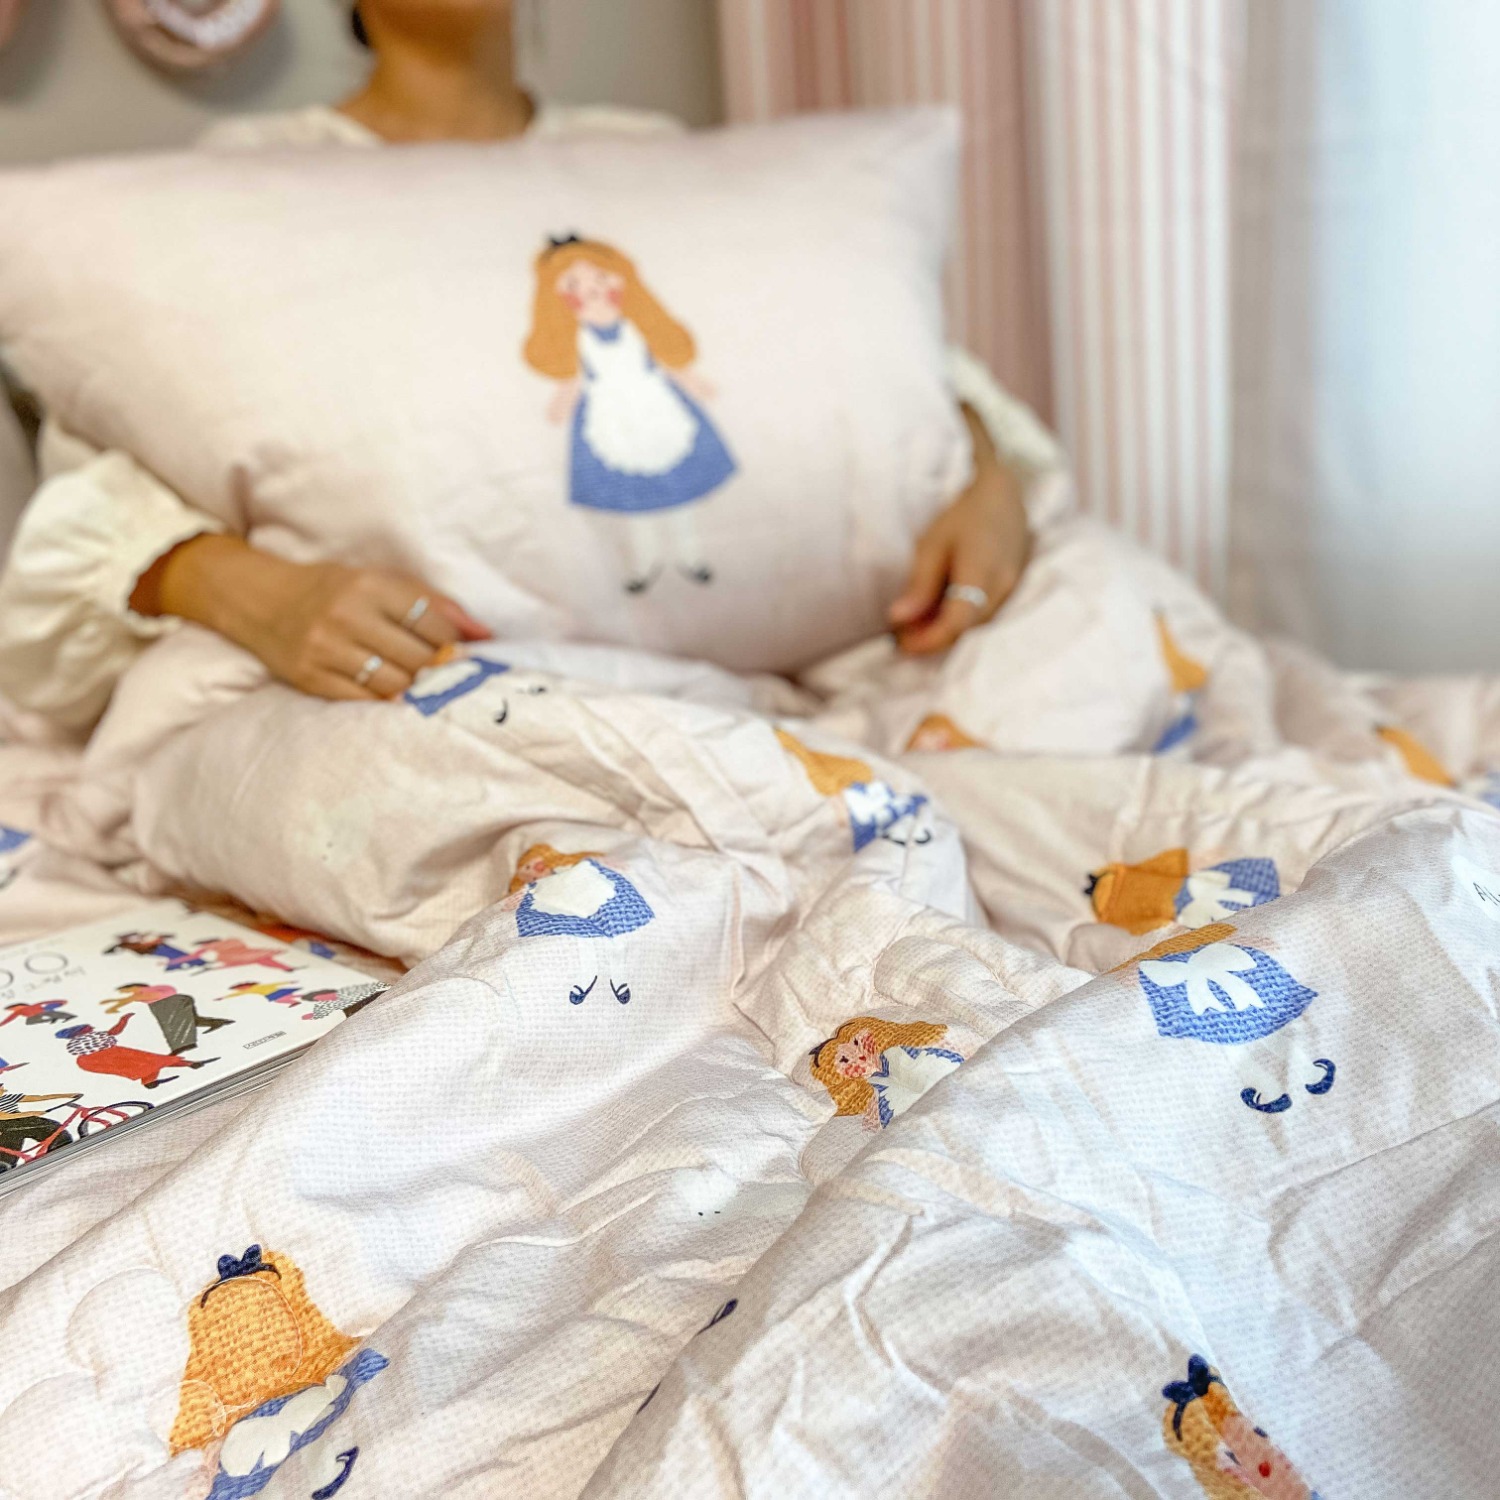 Alice in wonderland bed comforter set